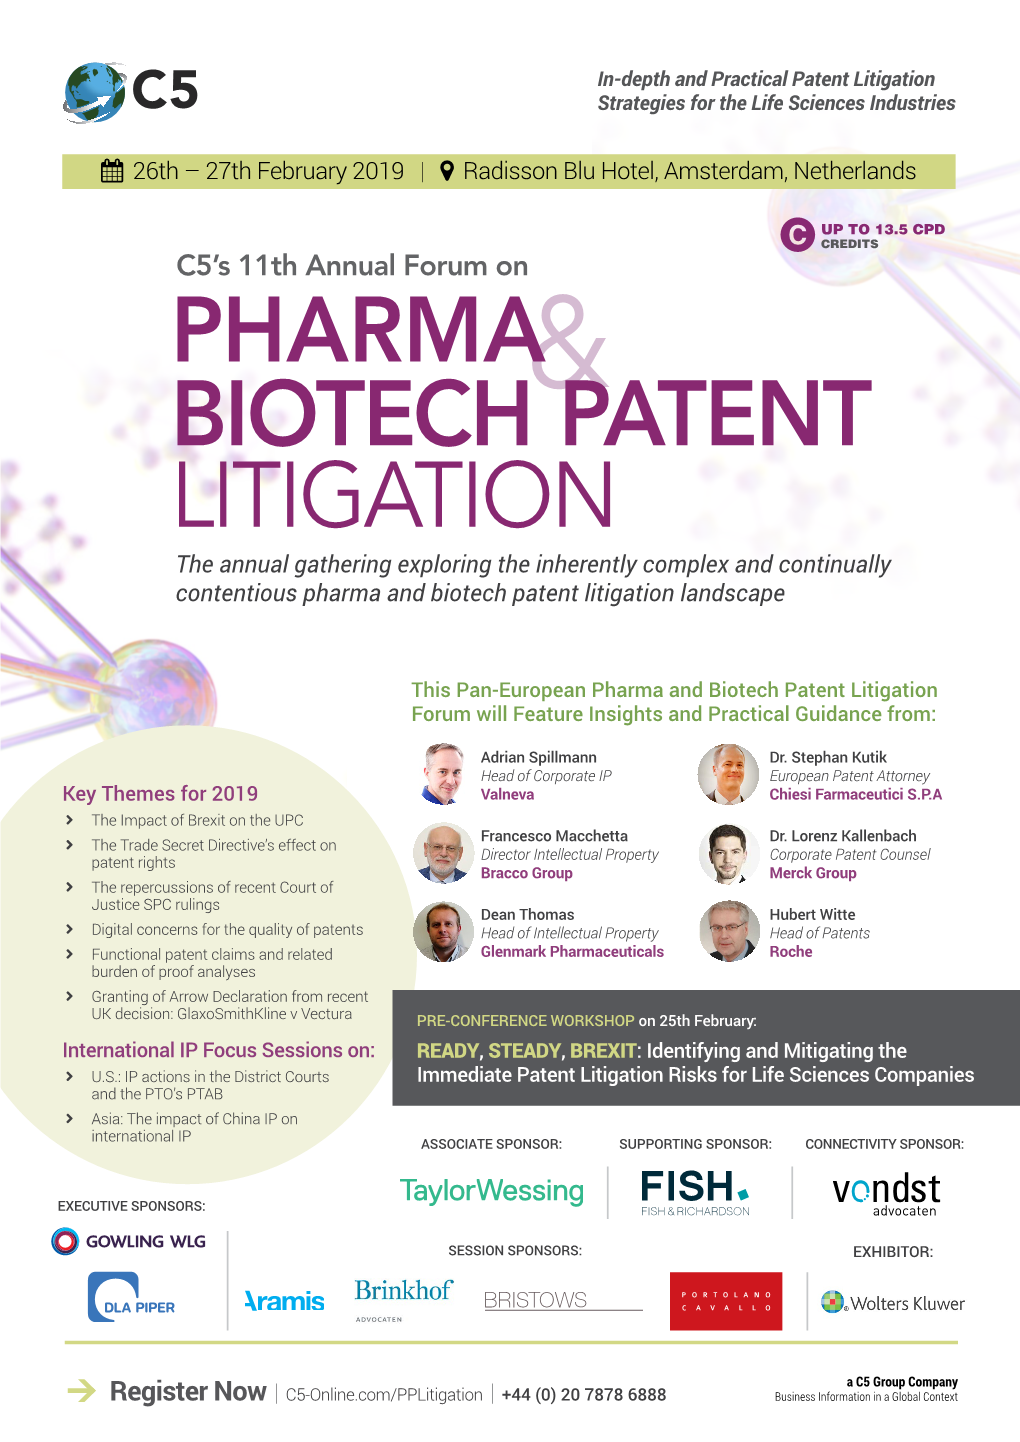 Pharma Biotech Patent Litigation